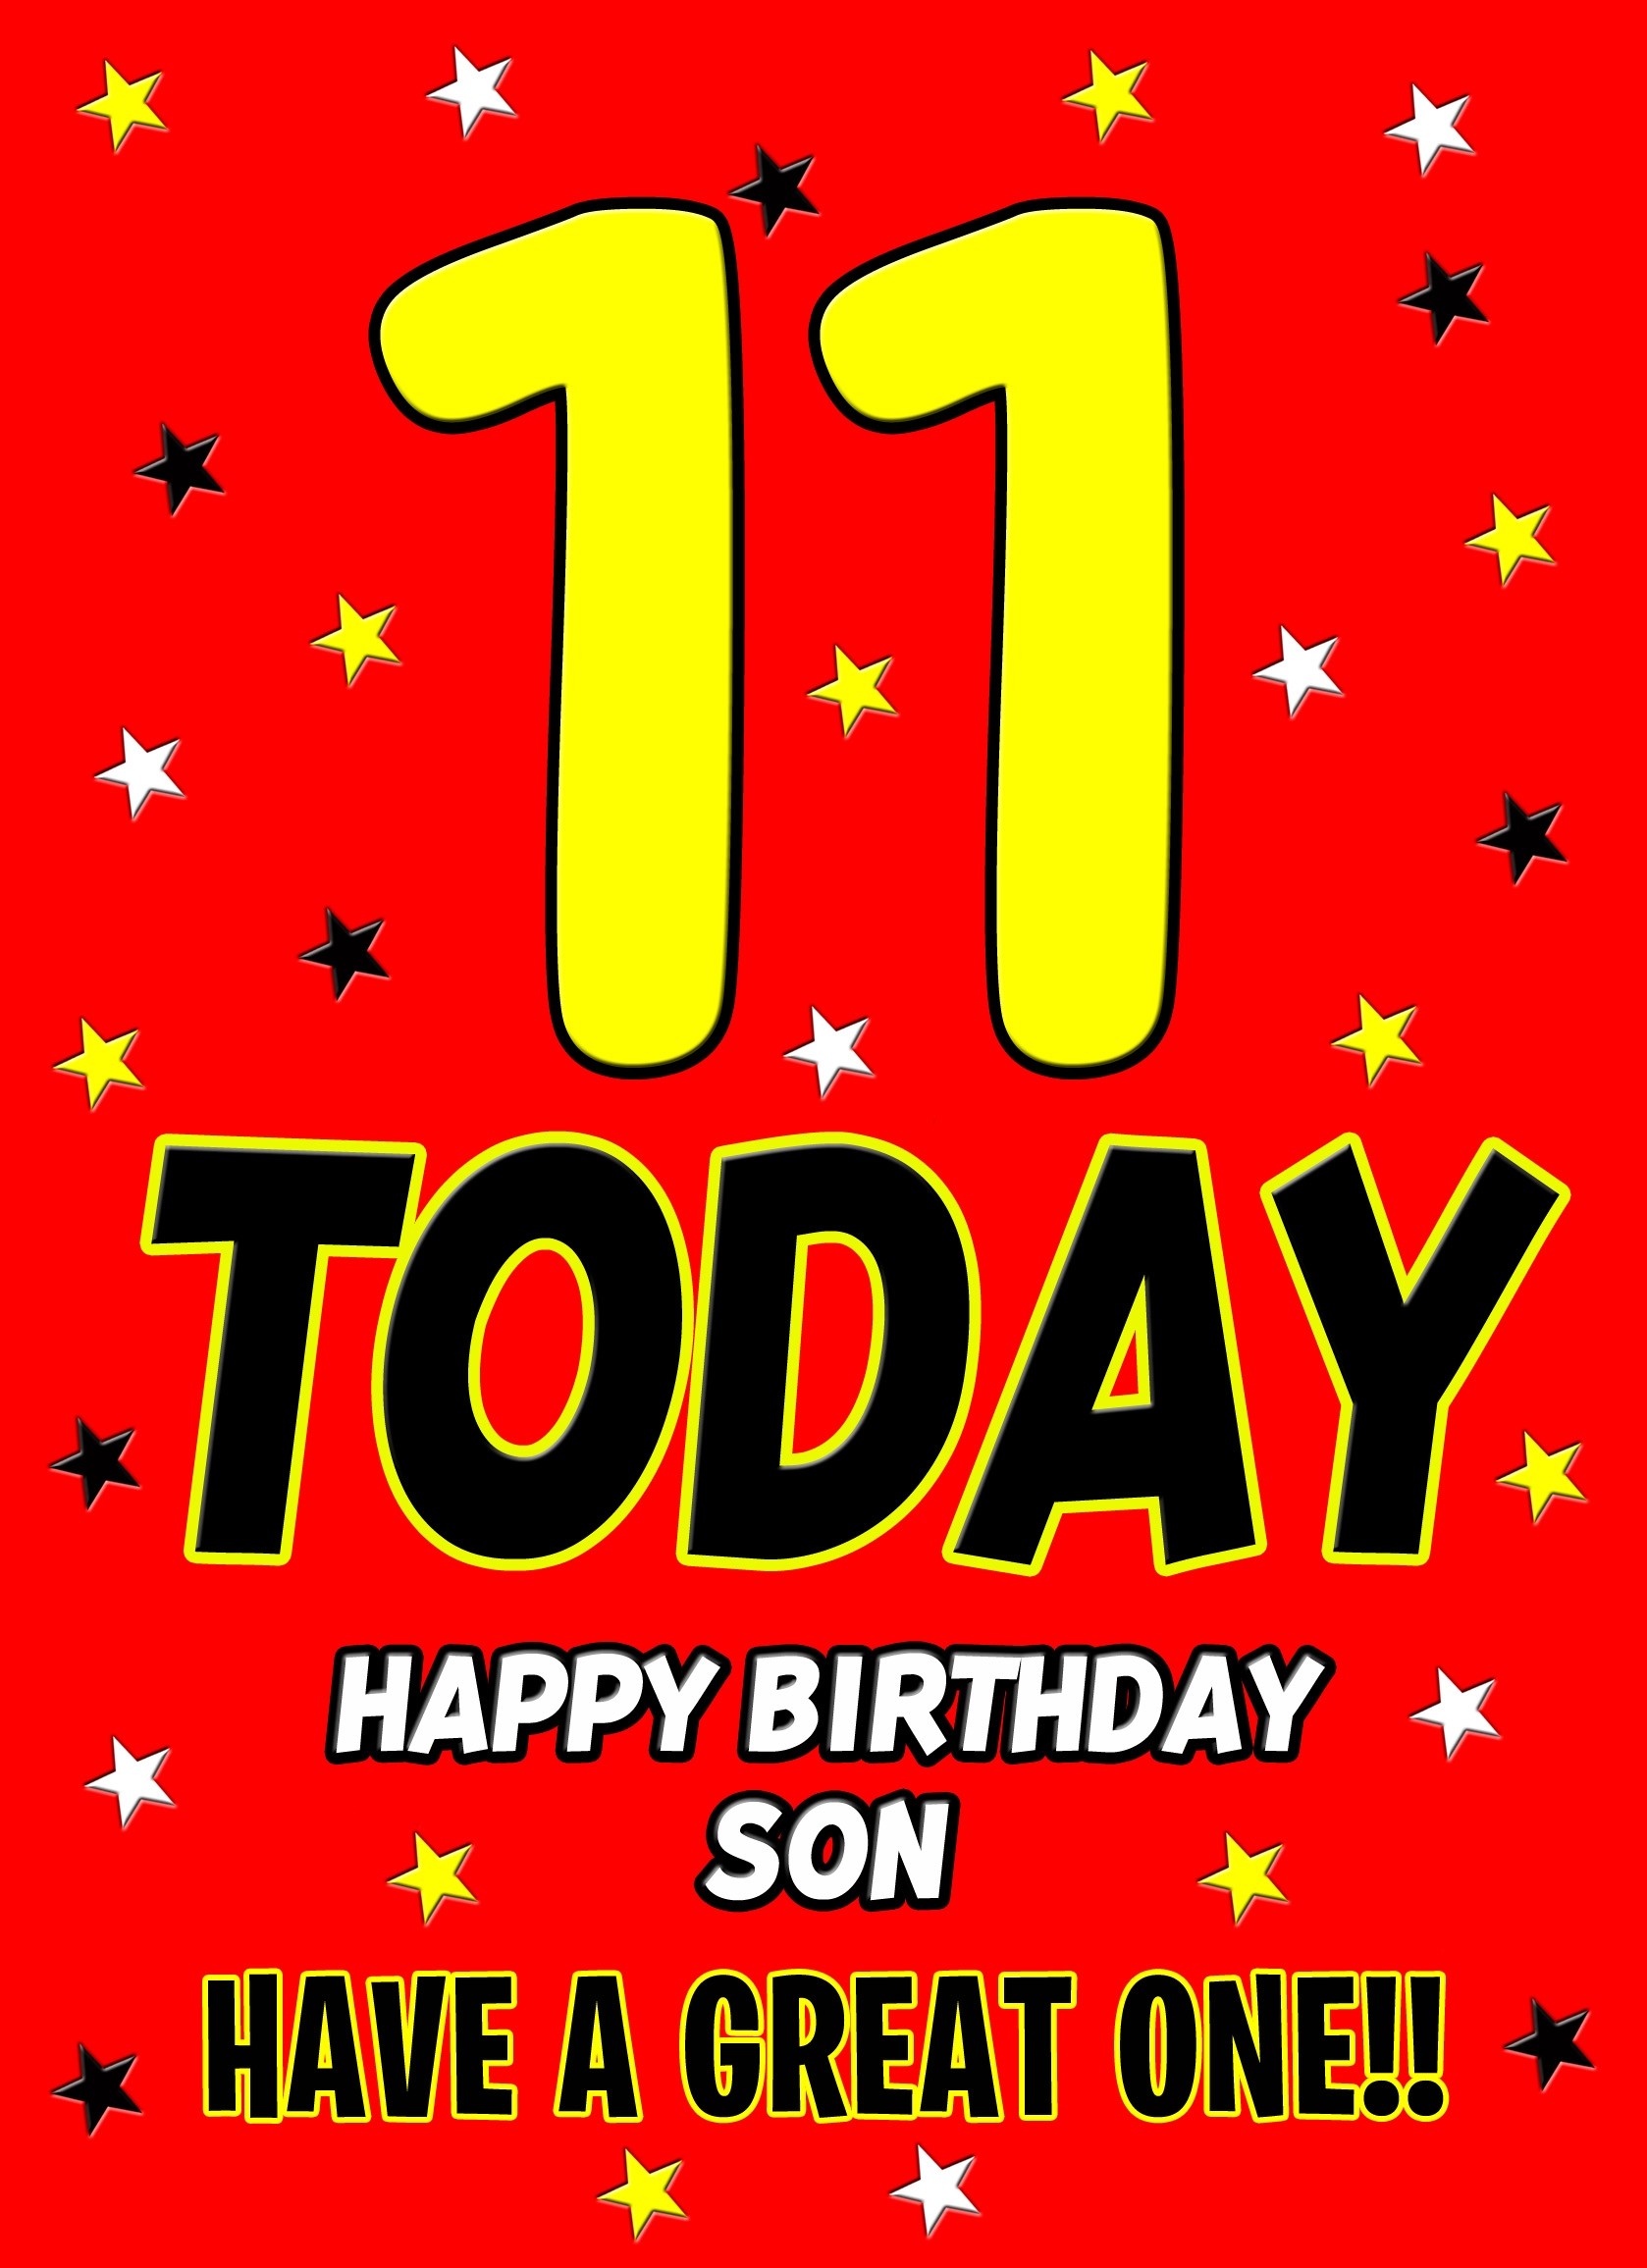 11 Today Birthday Card (Son)